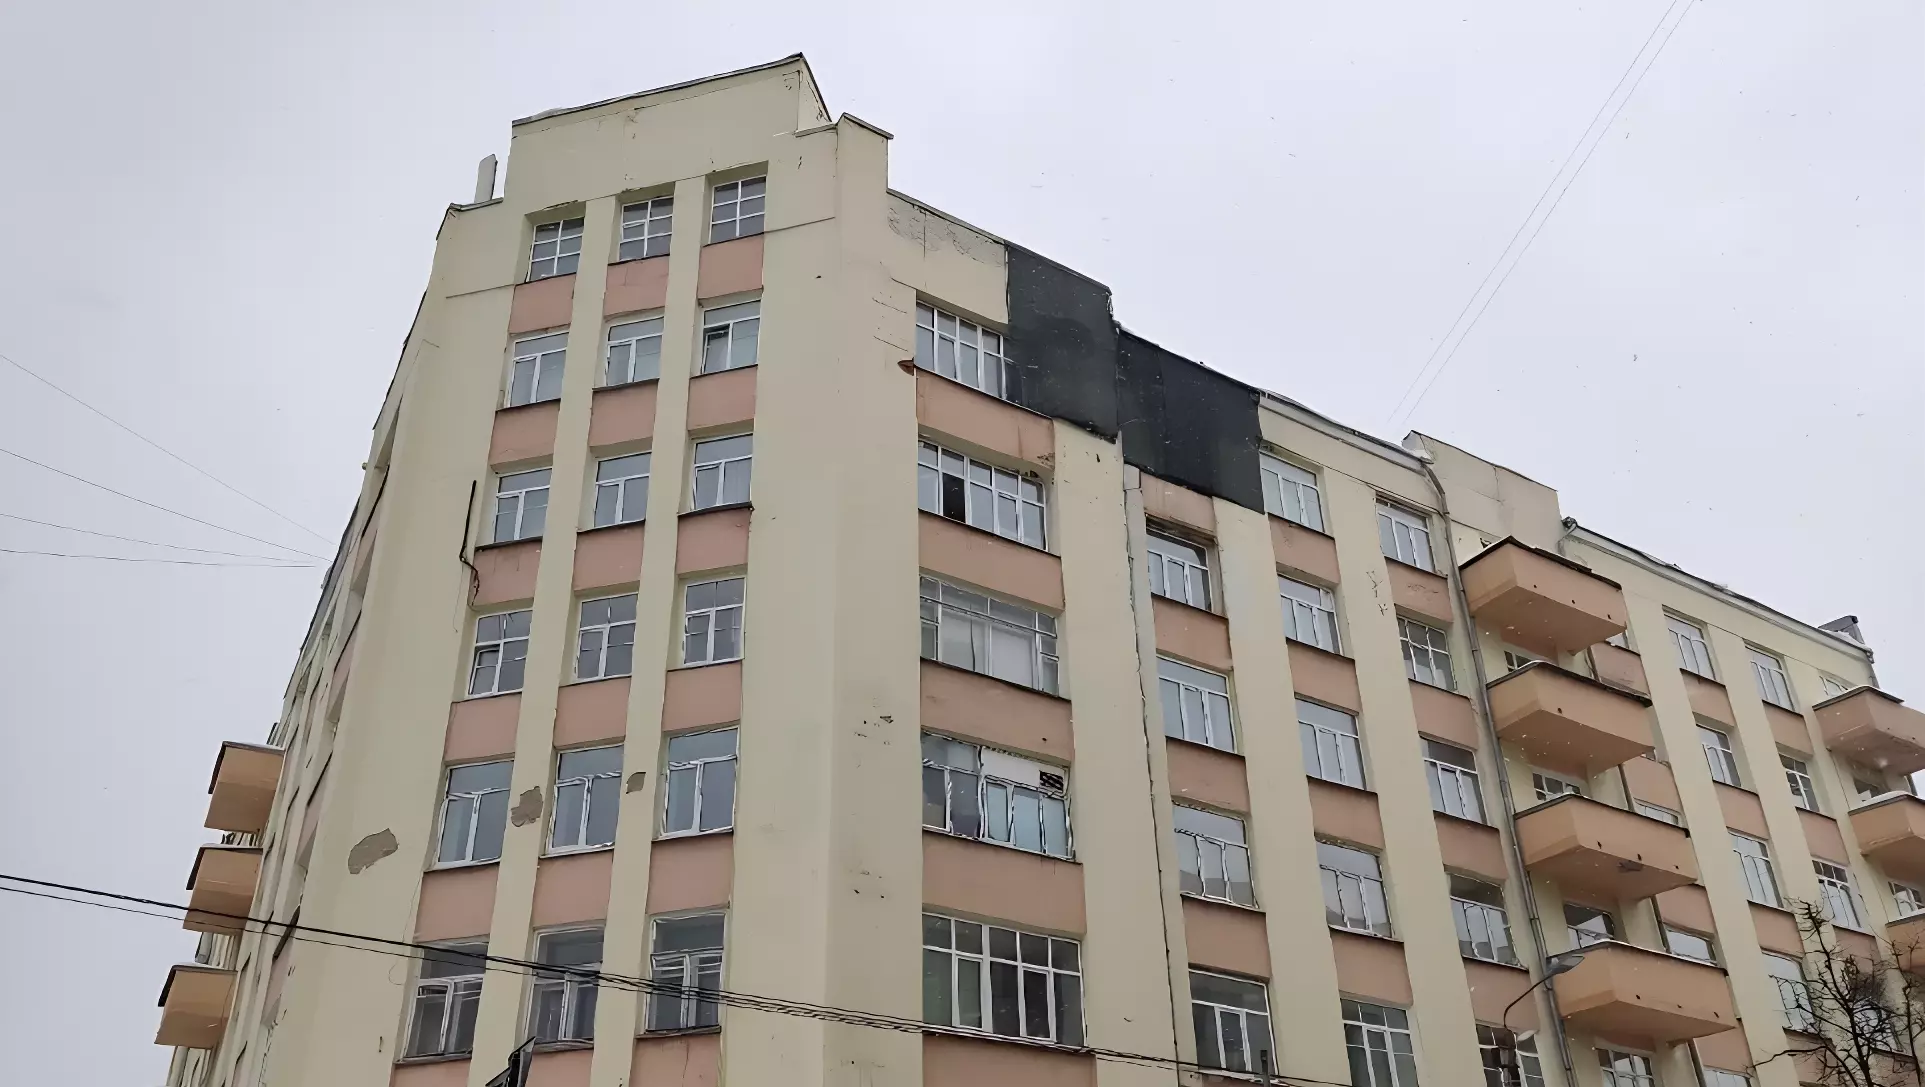 Власти Прикамья требуют привести в порядок гостиницу, где жил Арам Хачатурян